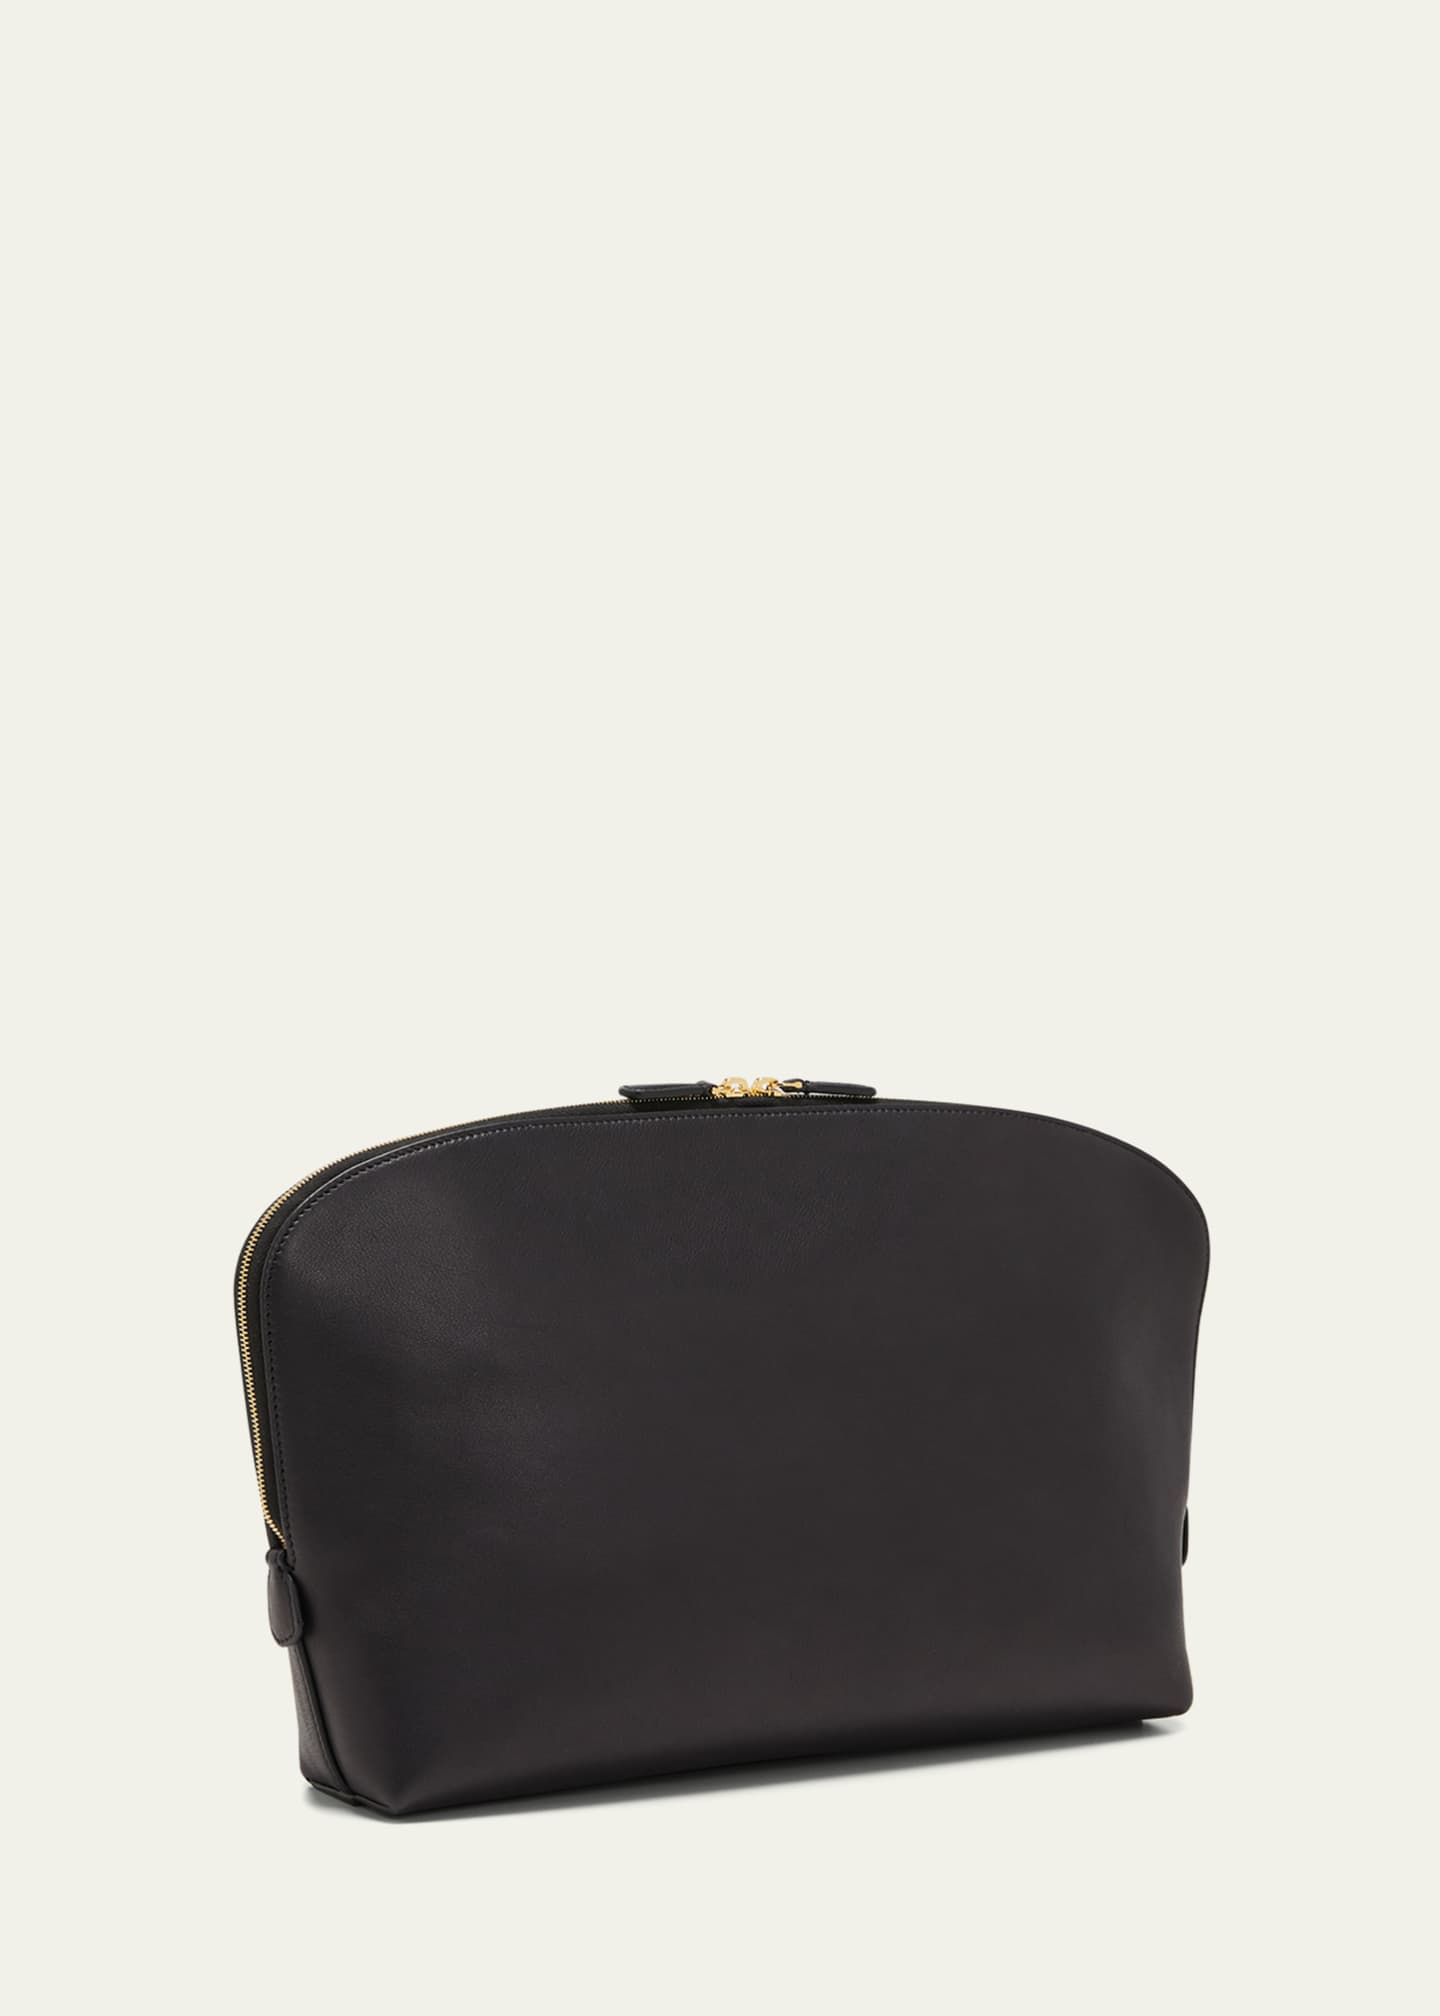 black clutch bag